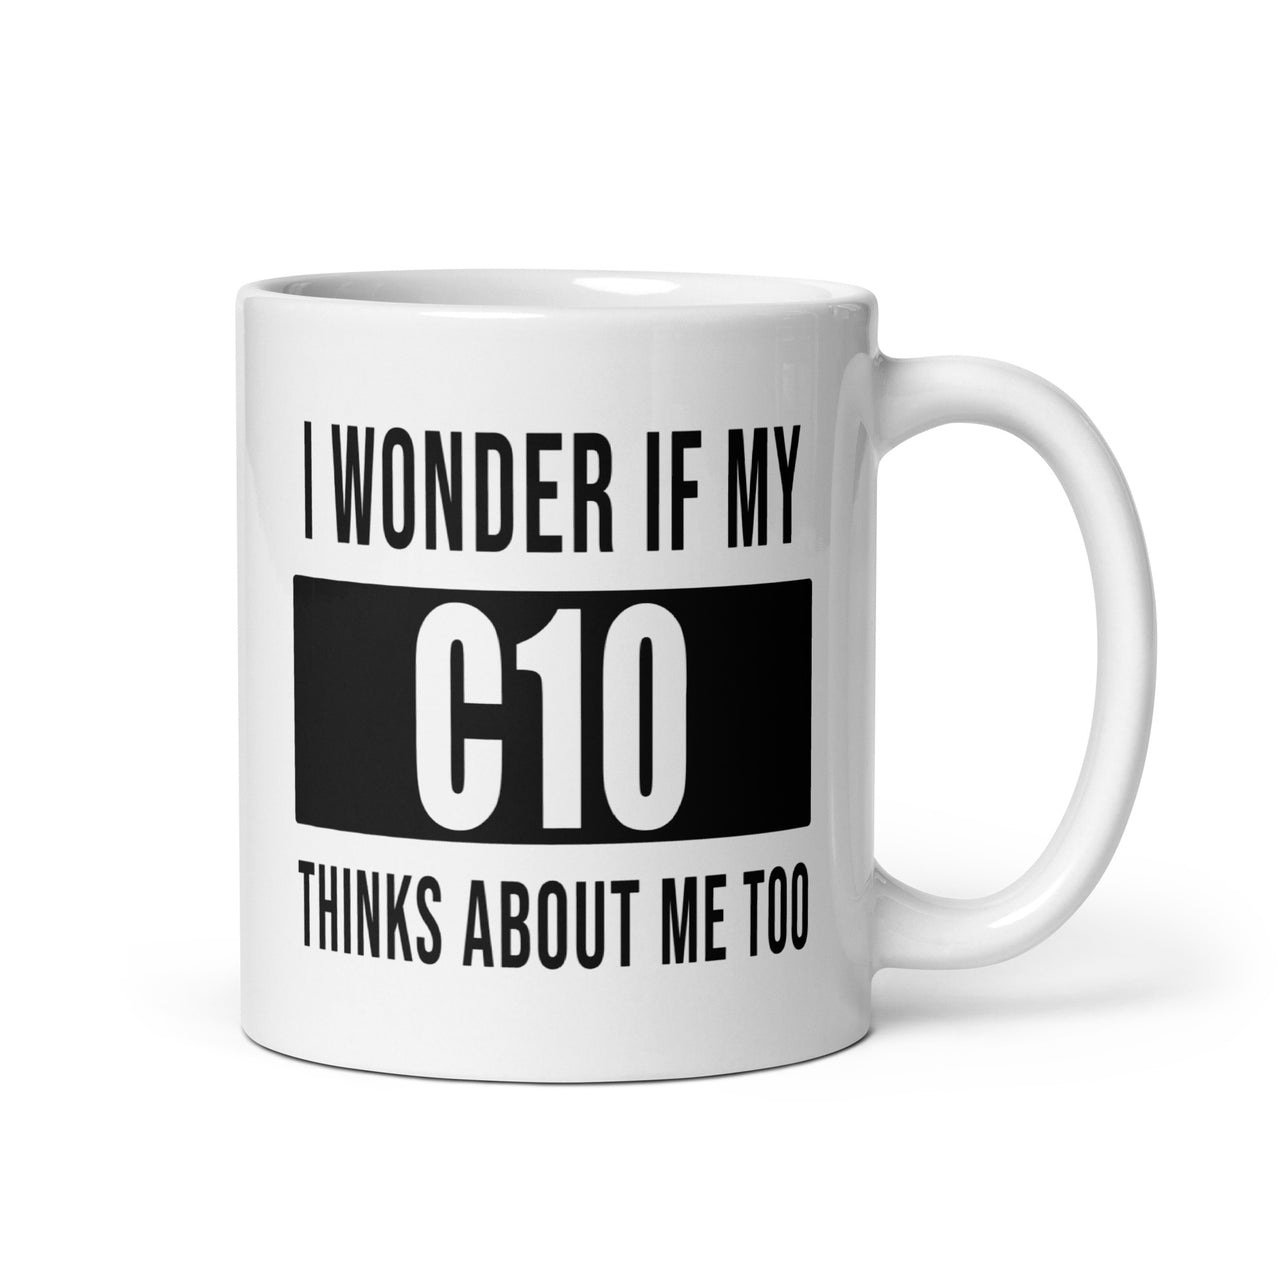 C10 Truck Coffee Mug Cup